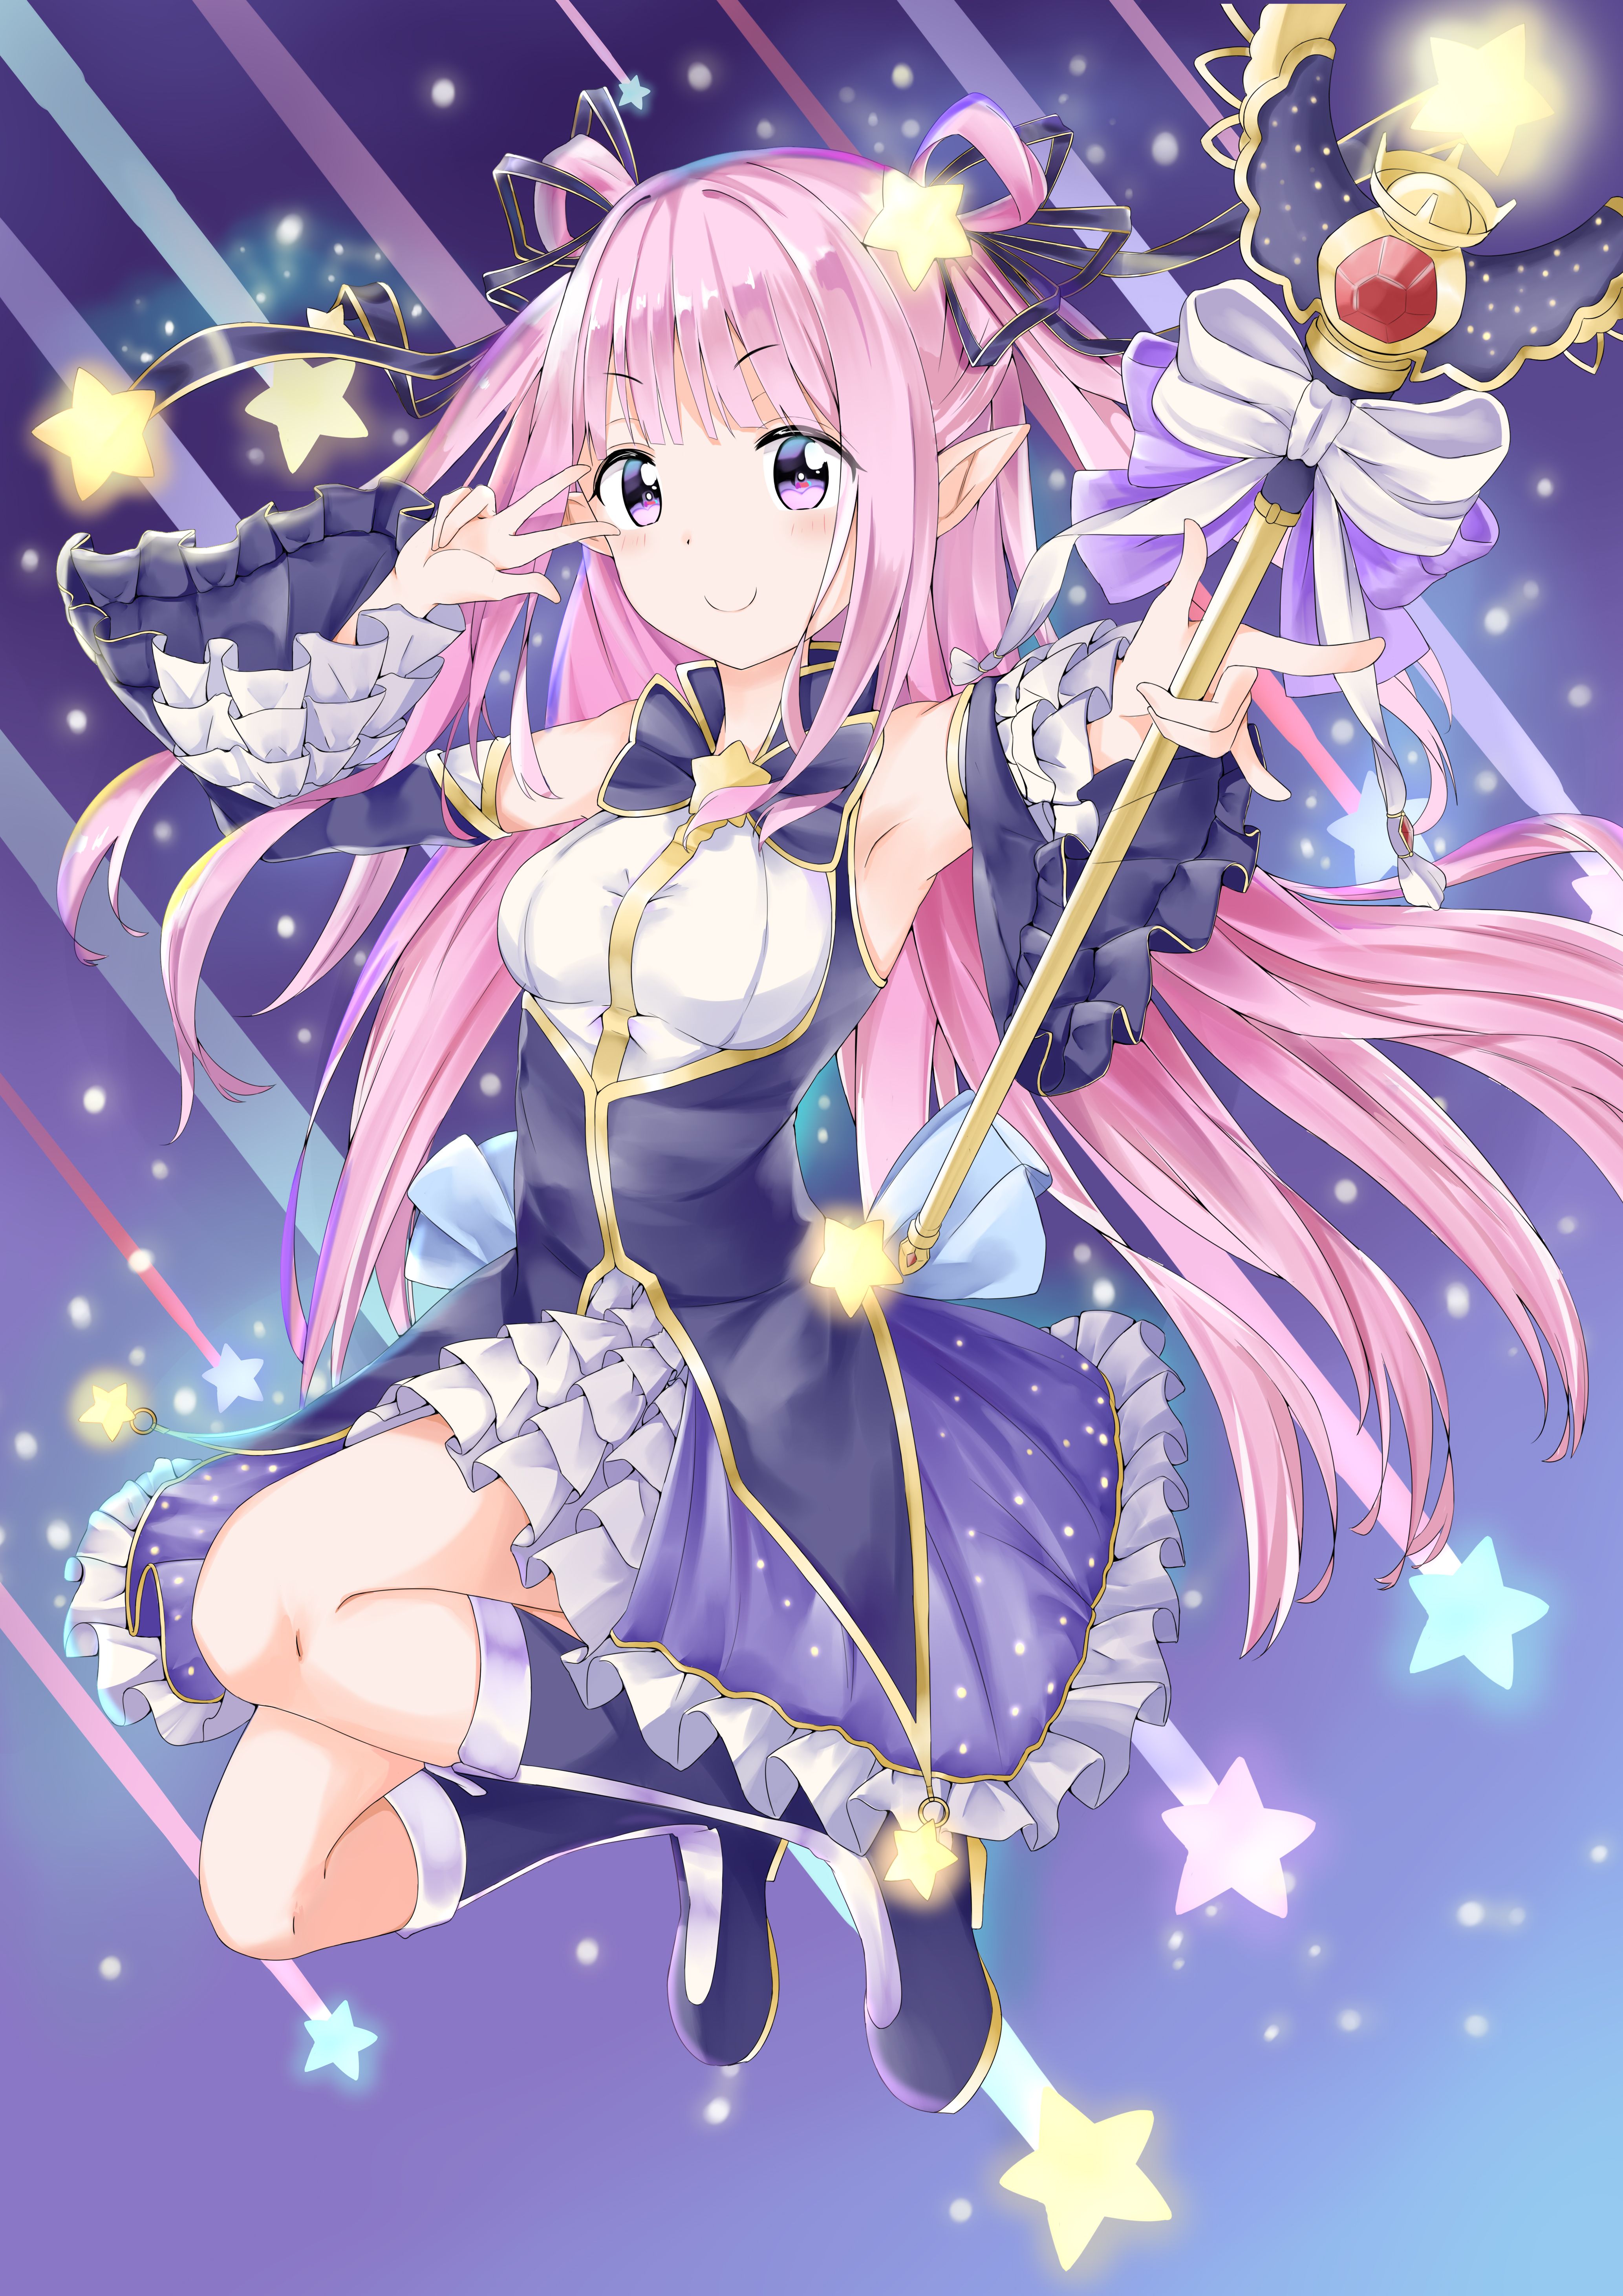 Princess Connect Anime Image Board